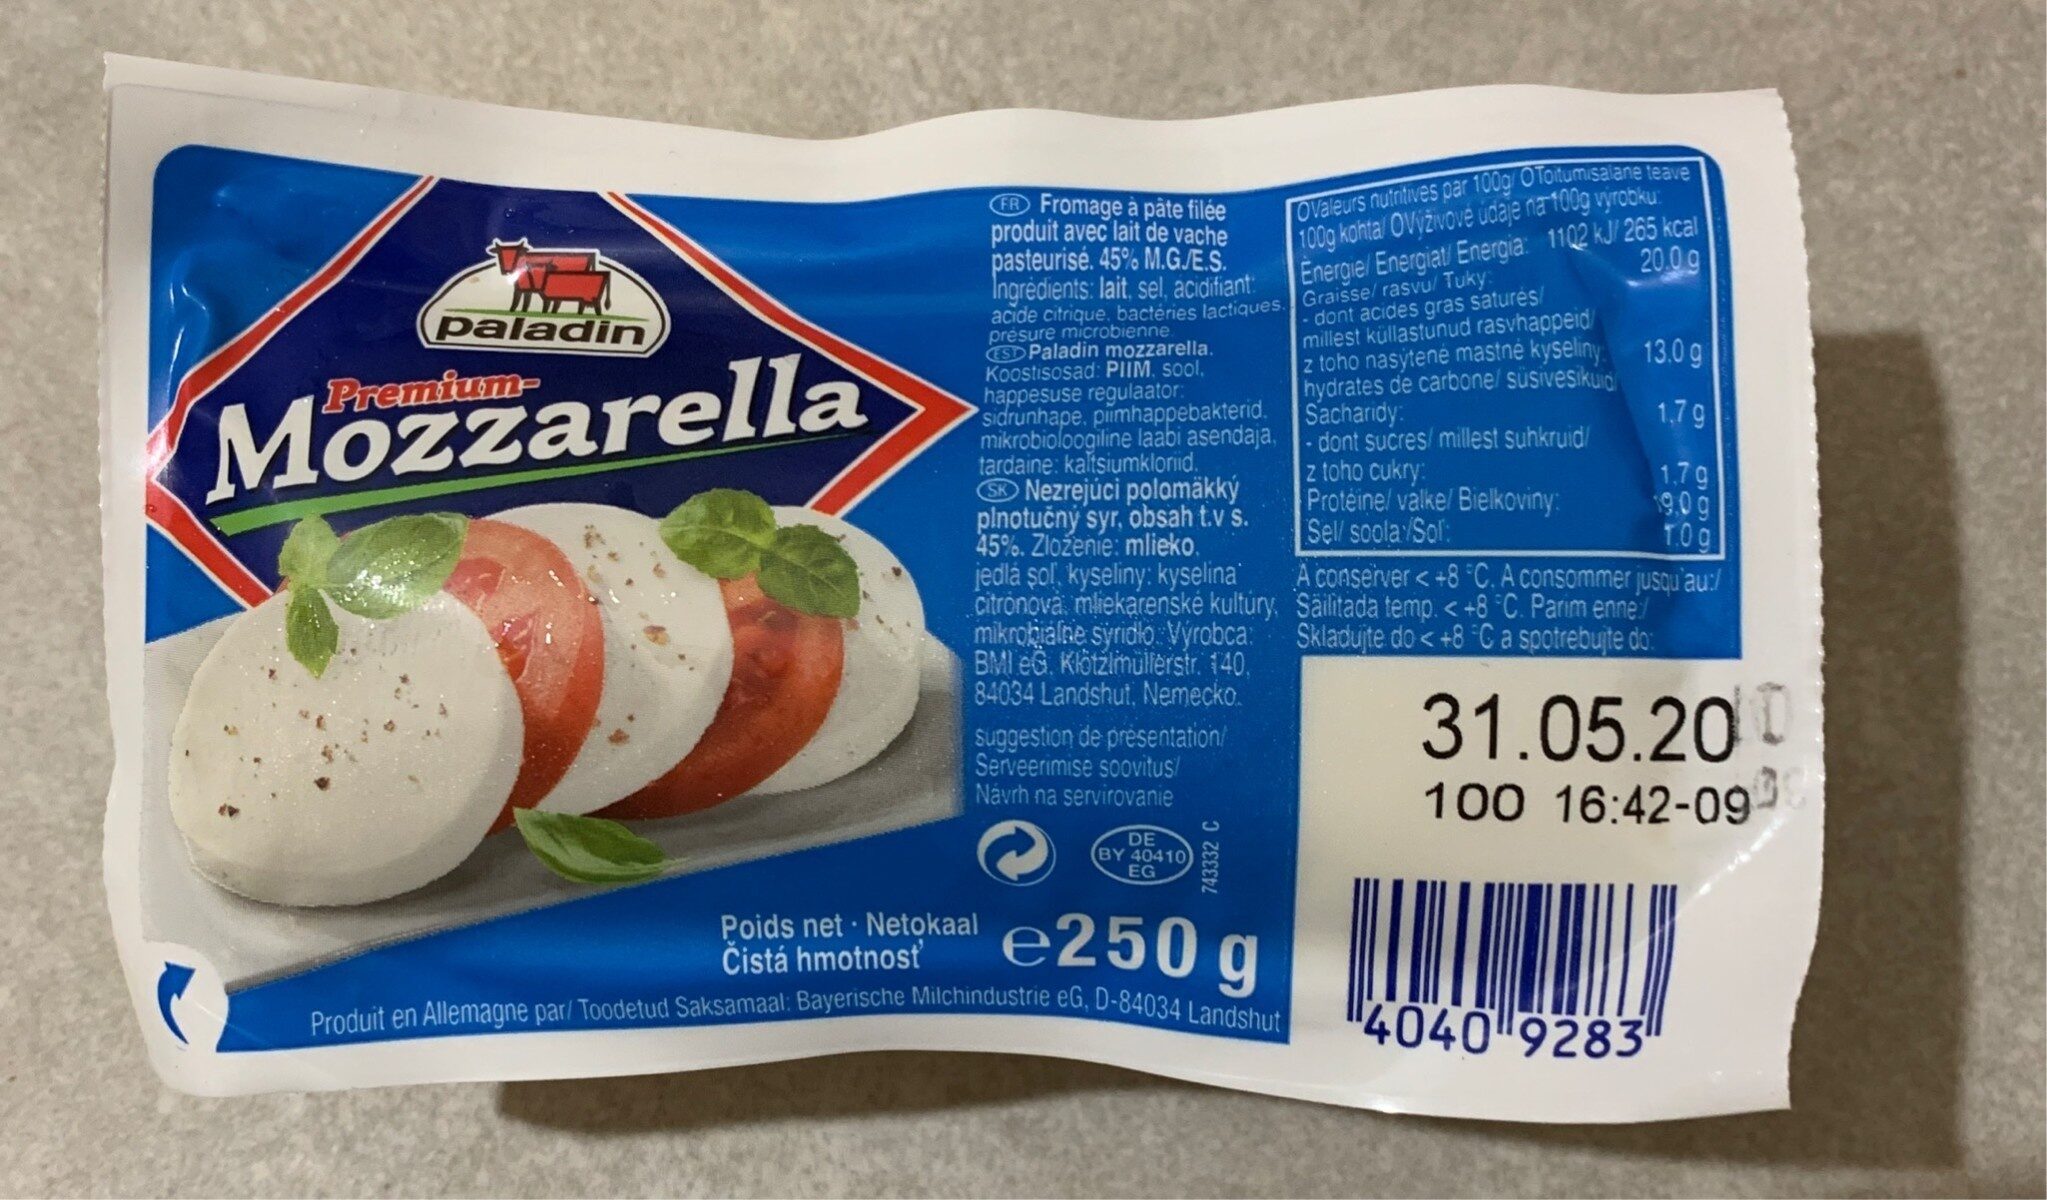 Paladin Mozzarella - Tableau nutritionnel